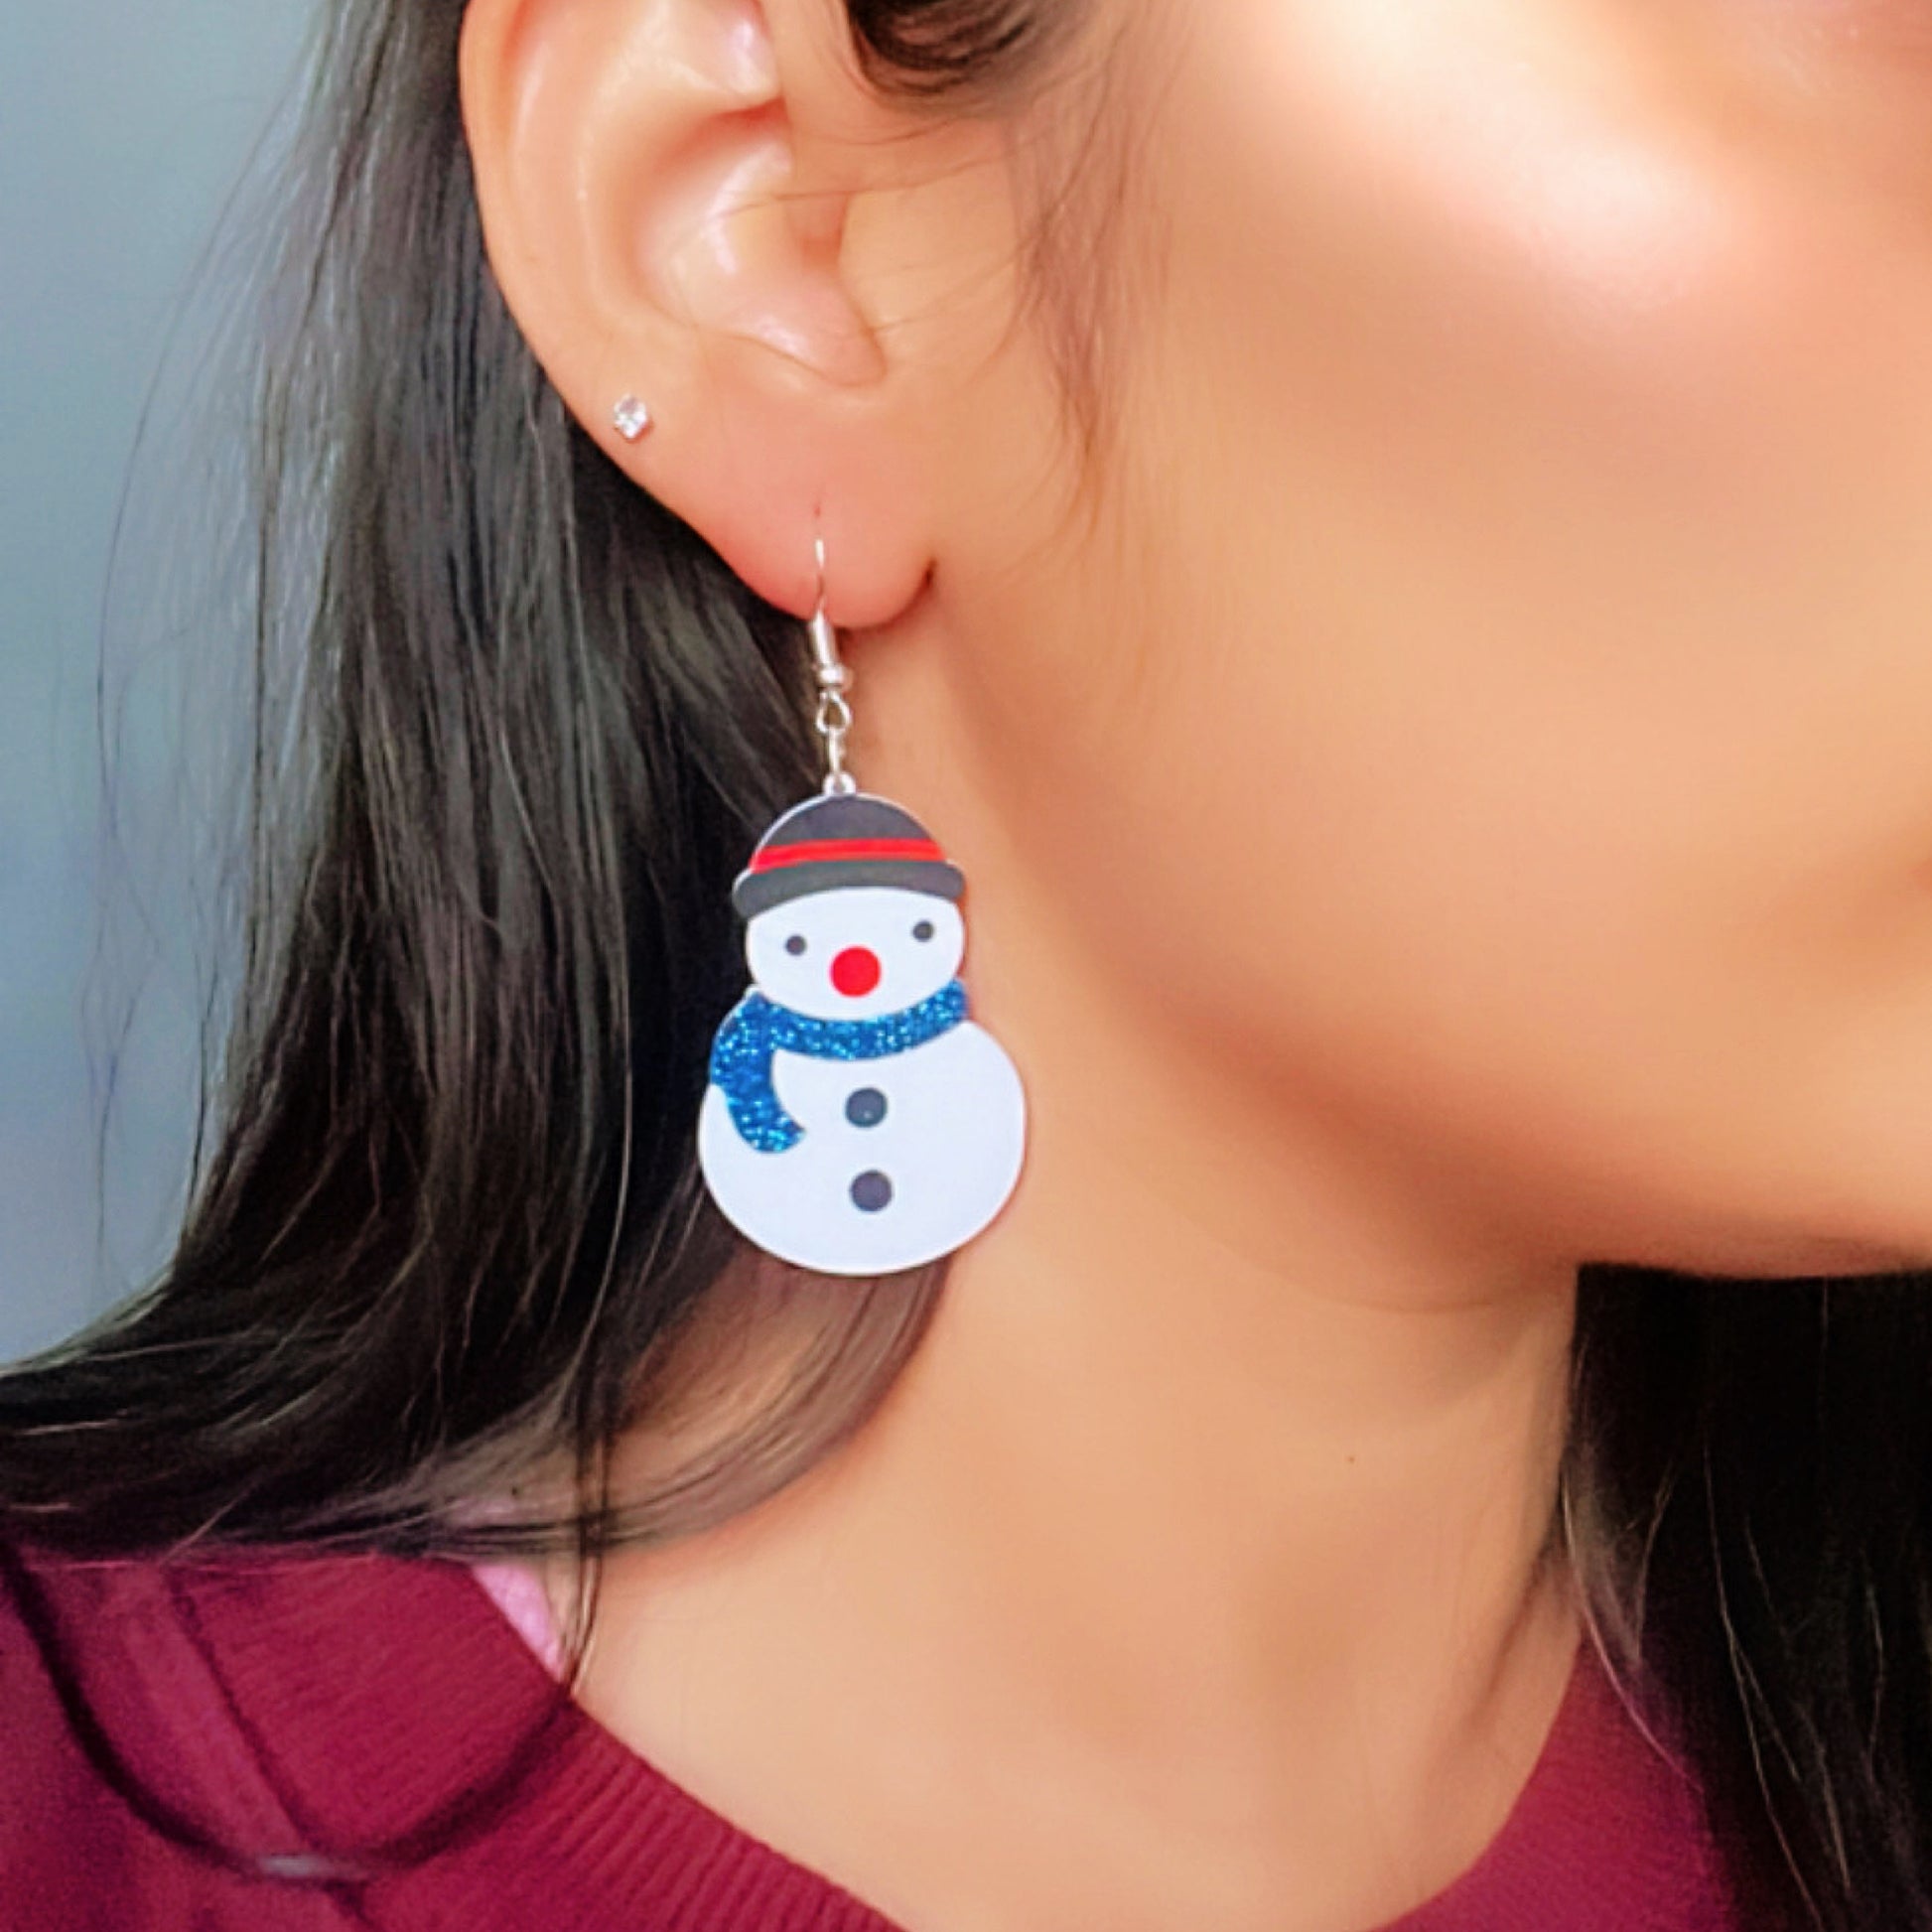 Snowman Earrings - White - Nian by Nidhi - worn by a woman